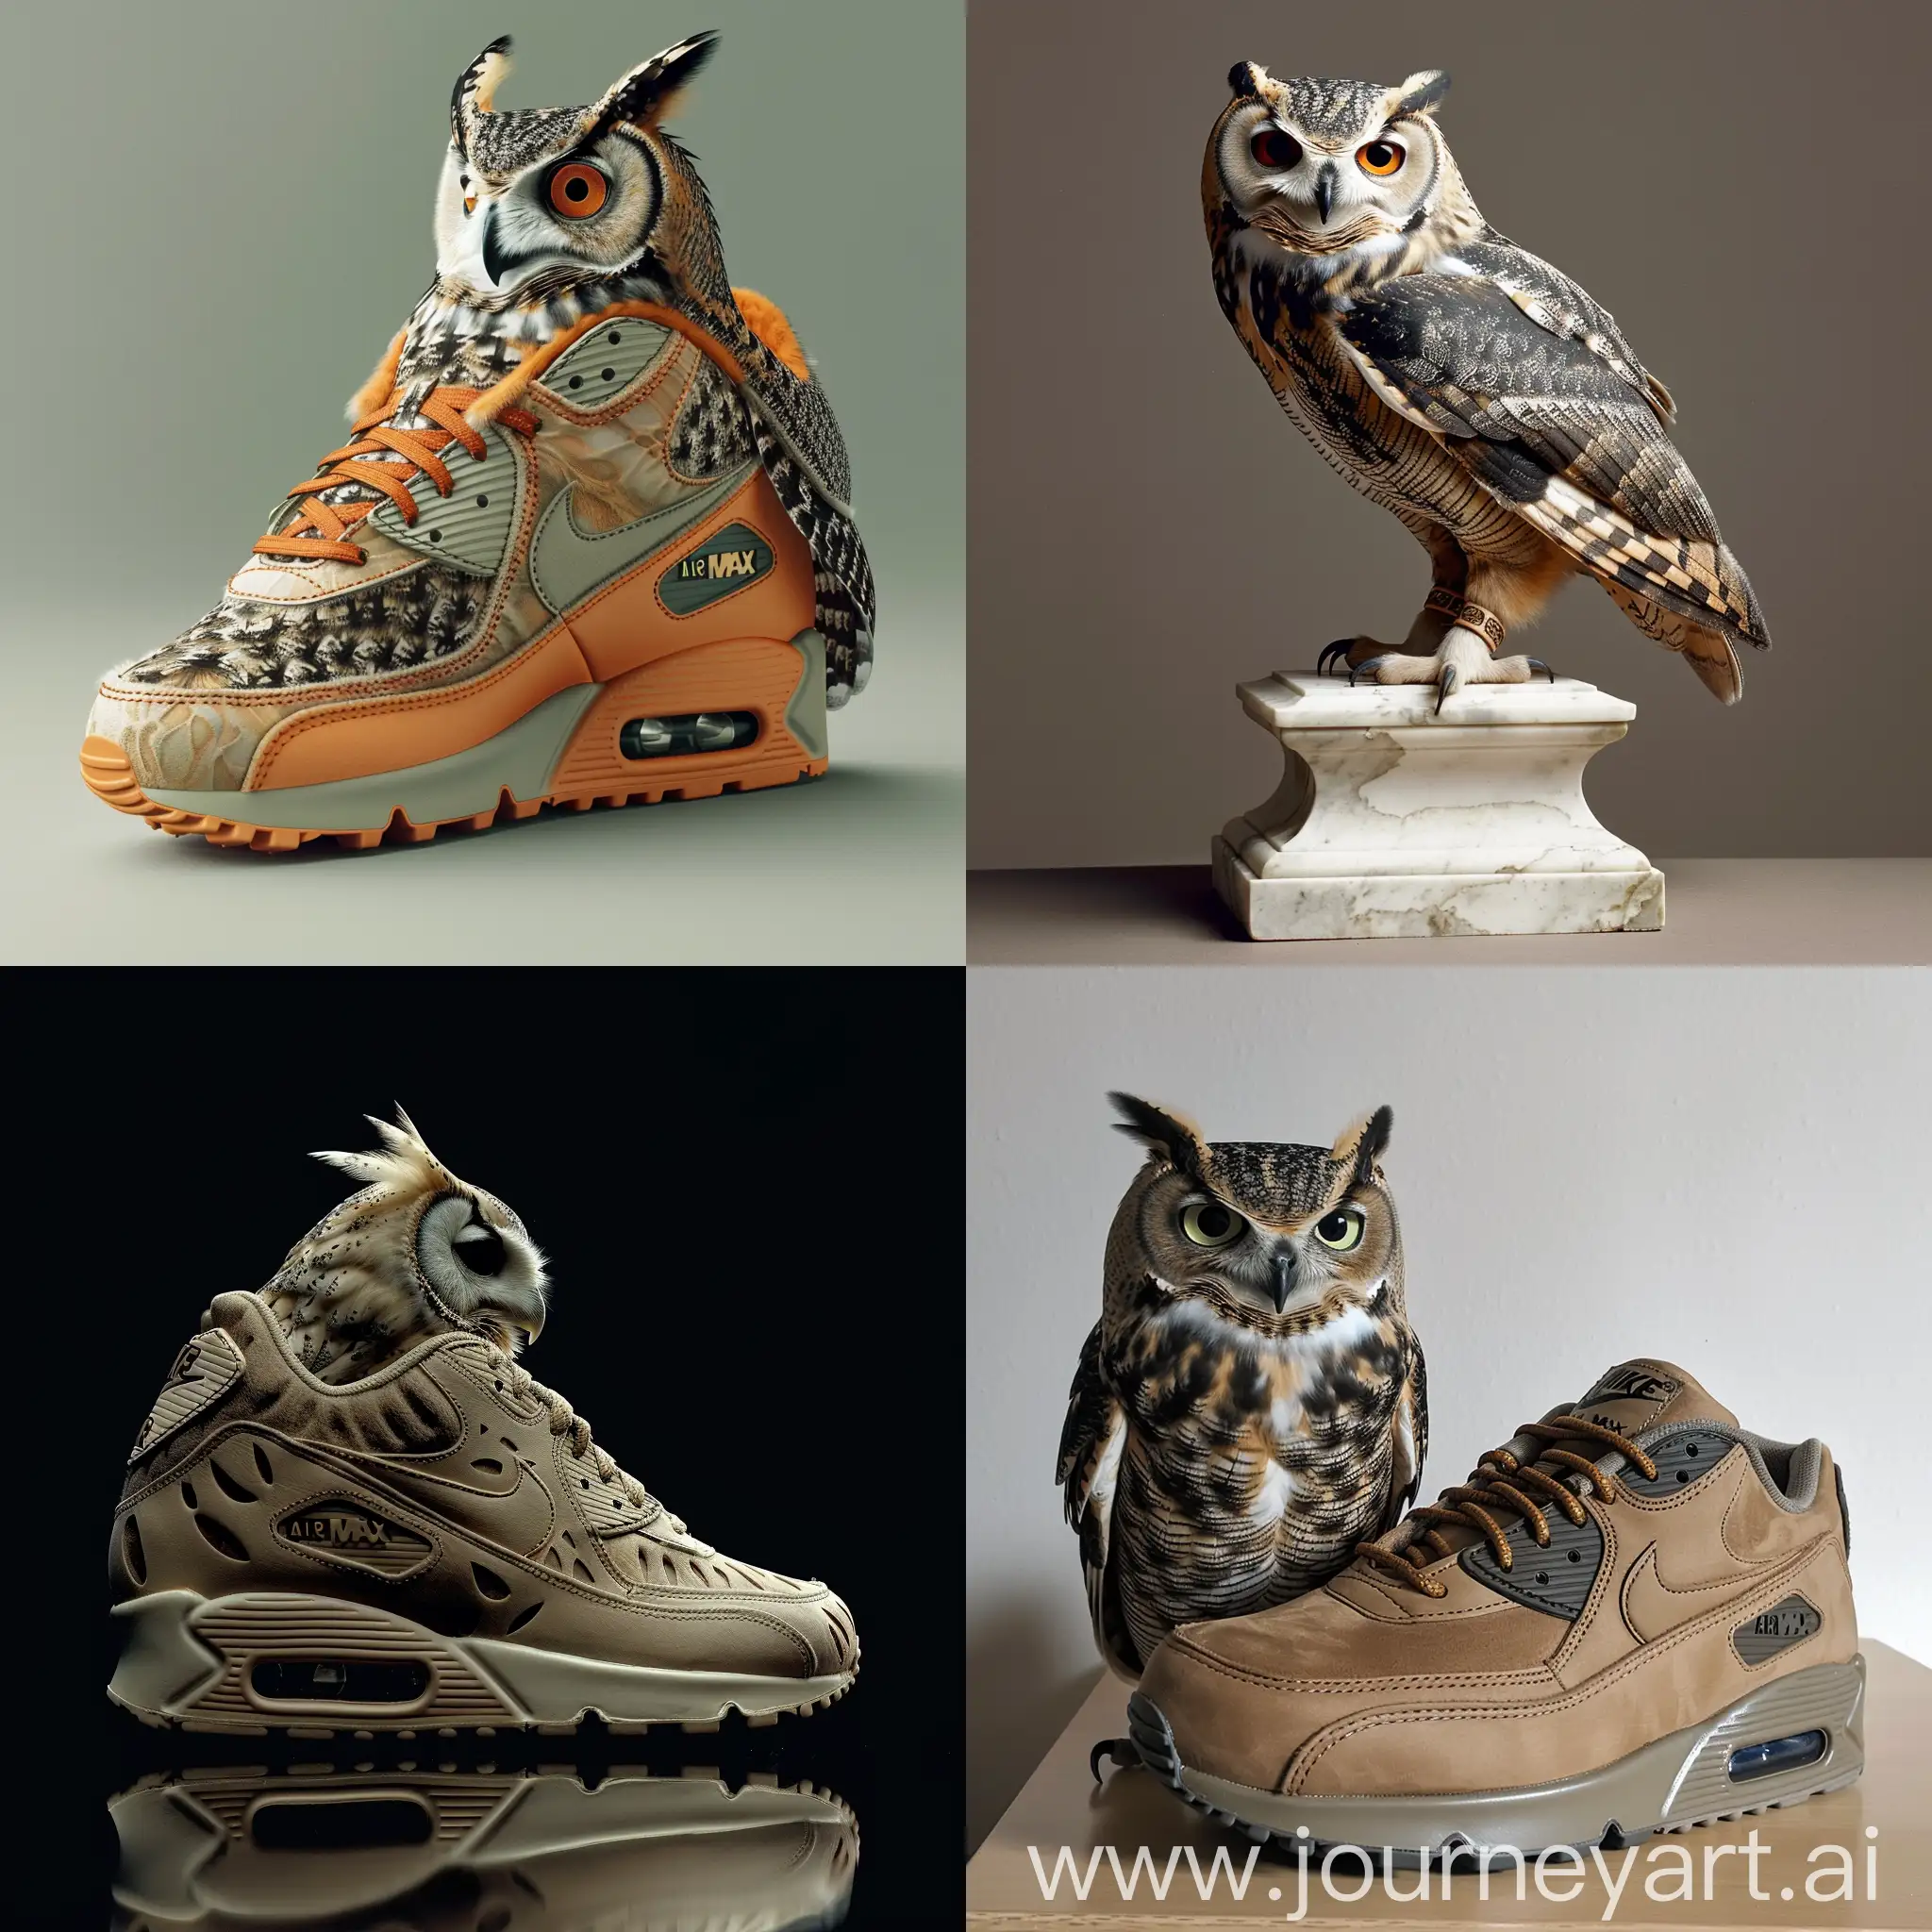 Owl-Wearing-Air-Max-Sneakers